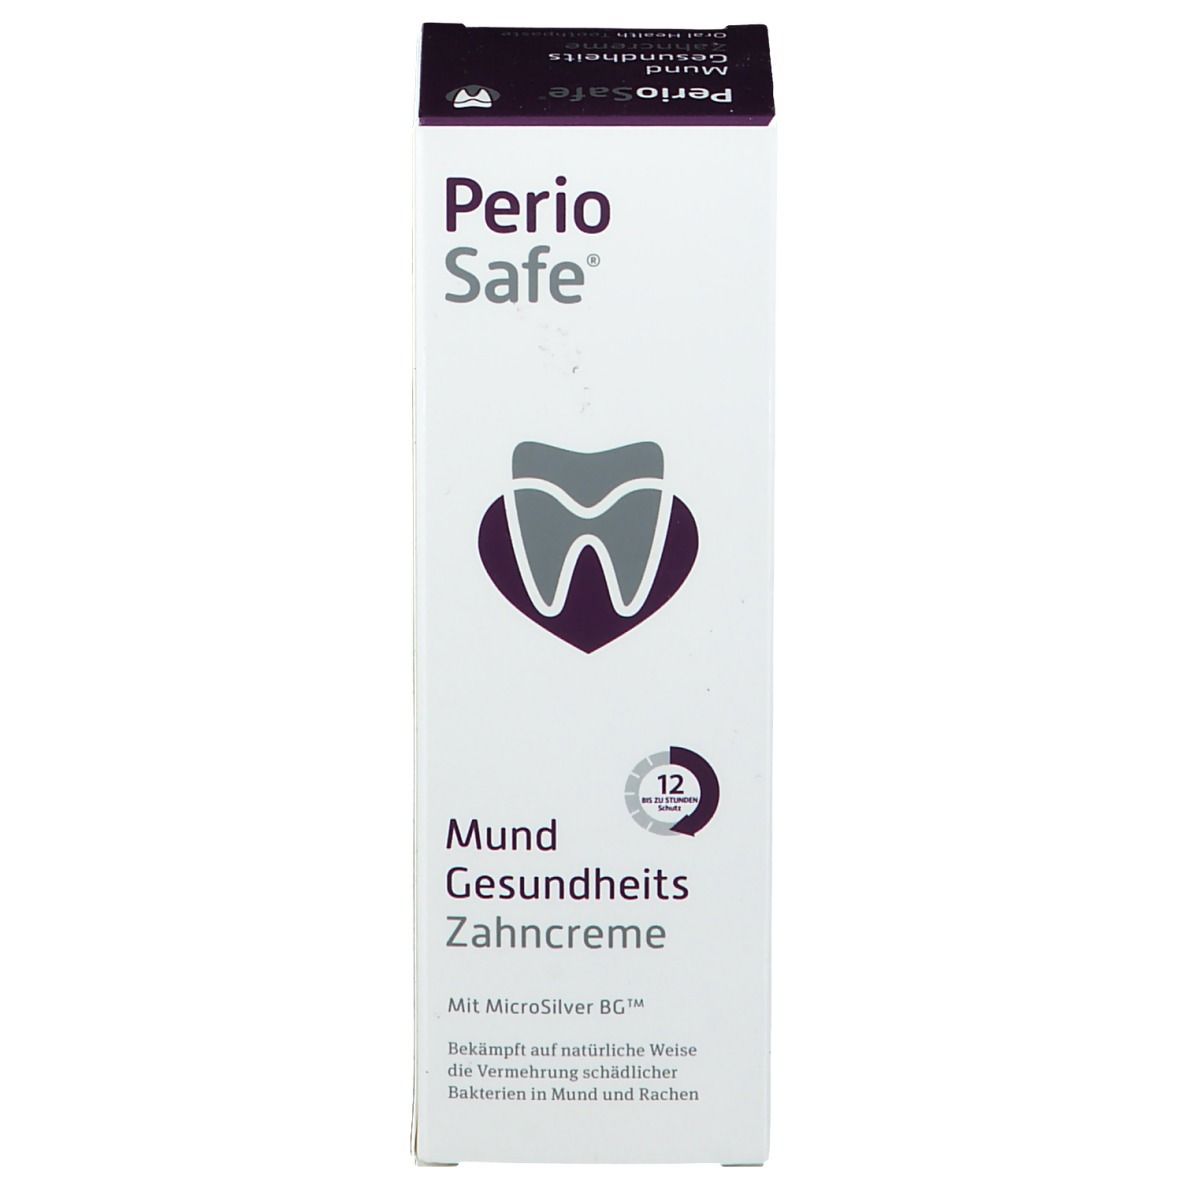 PerioSafe® Mundgesundheits-Zahncreme